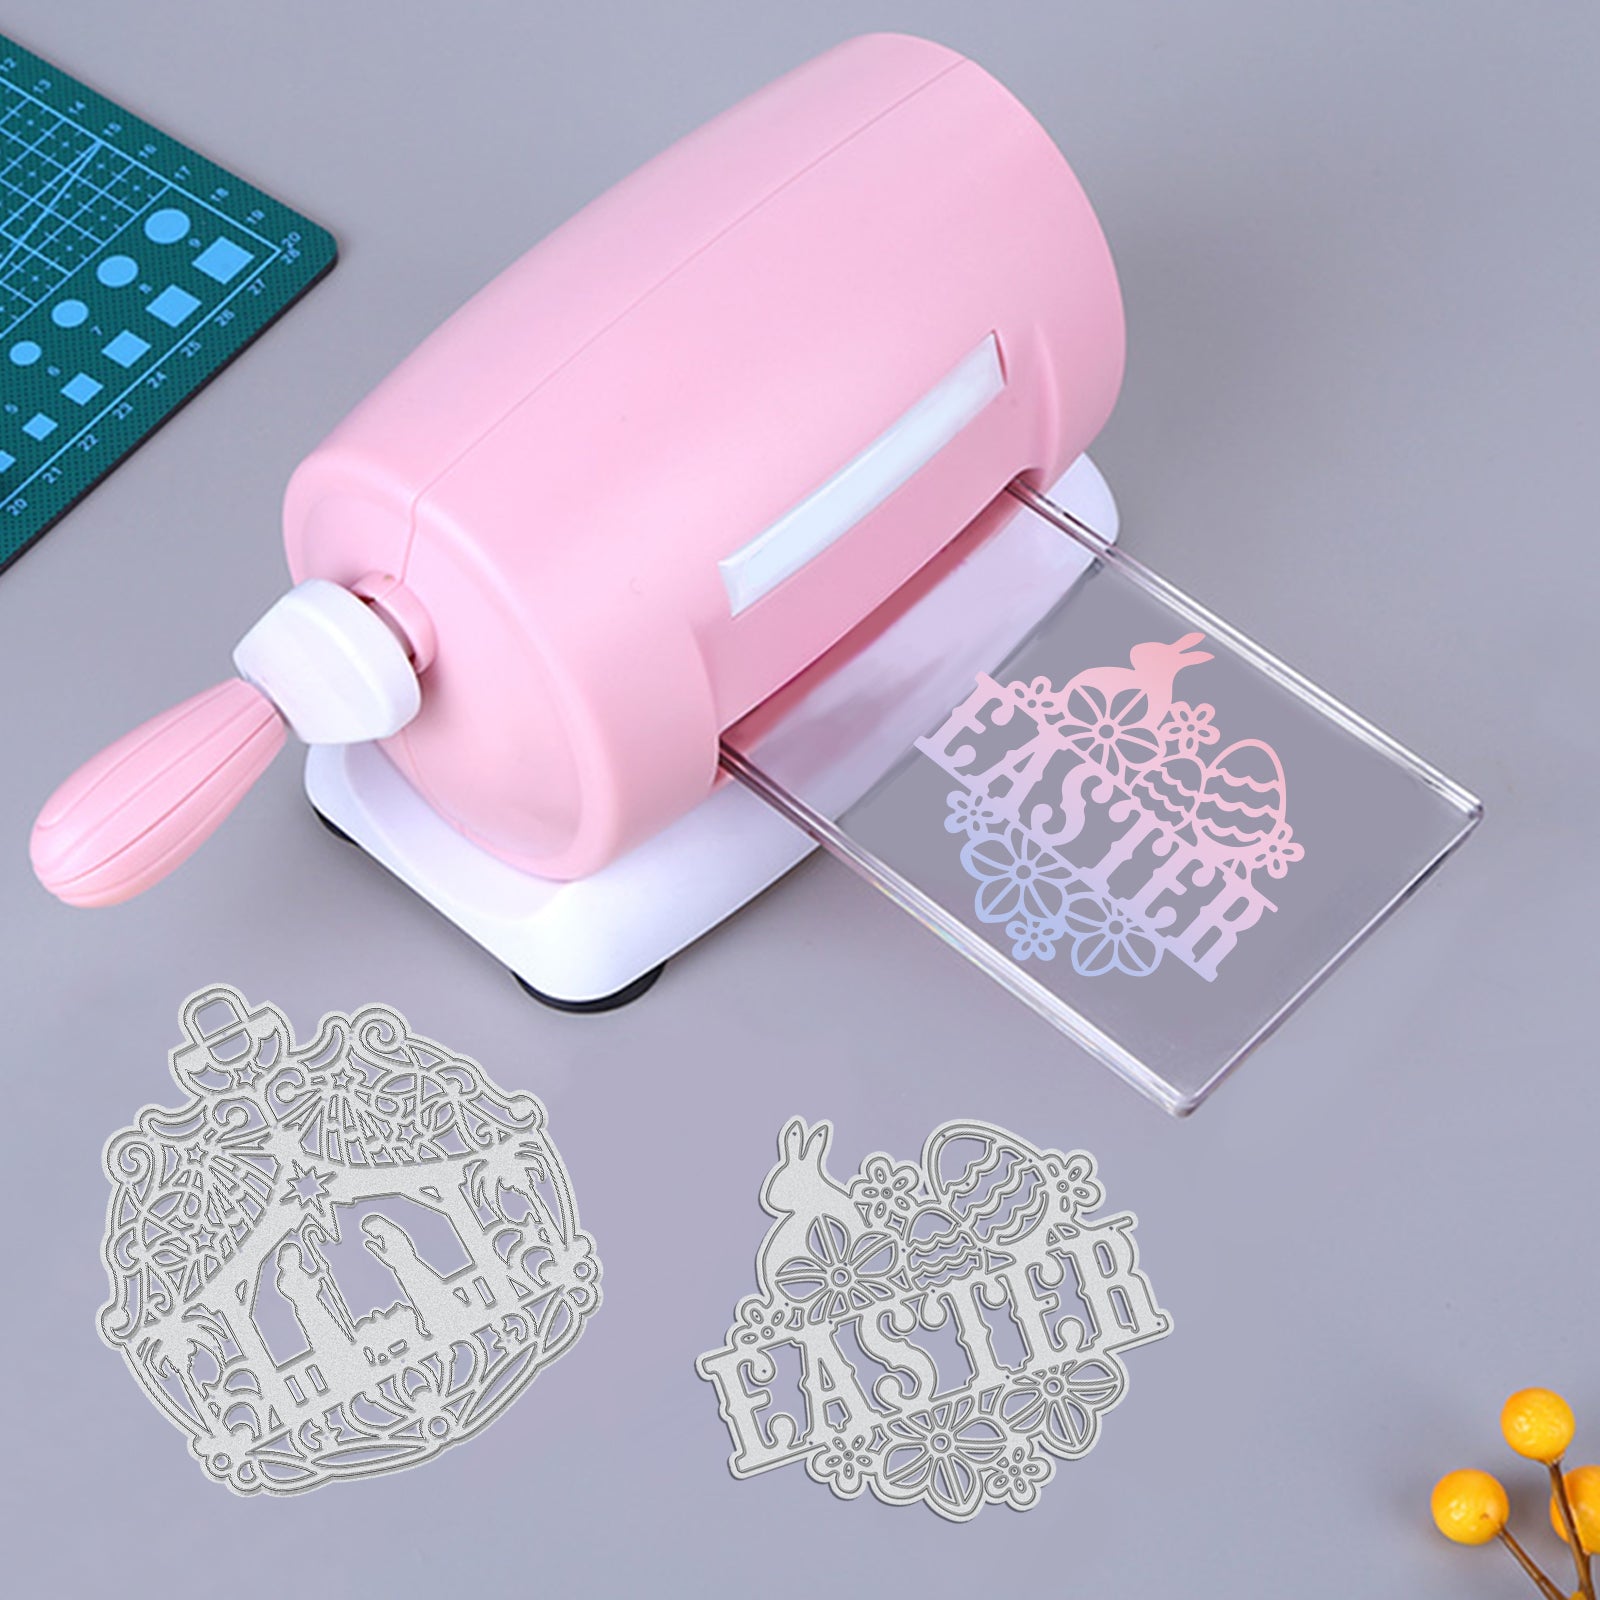 CRASPIRE 4Pcs Metal Easter Cutting Dies Bunny Rabbit Eggs Religion Crosses Stencil Template for Scrapbook Embossing Album Paper Card Craft Festival Decor, Matte Platinum